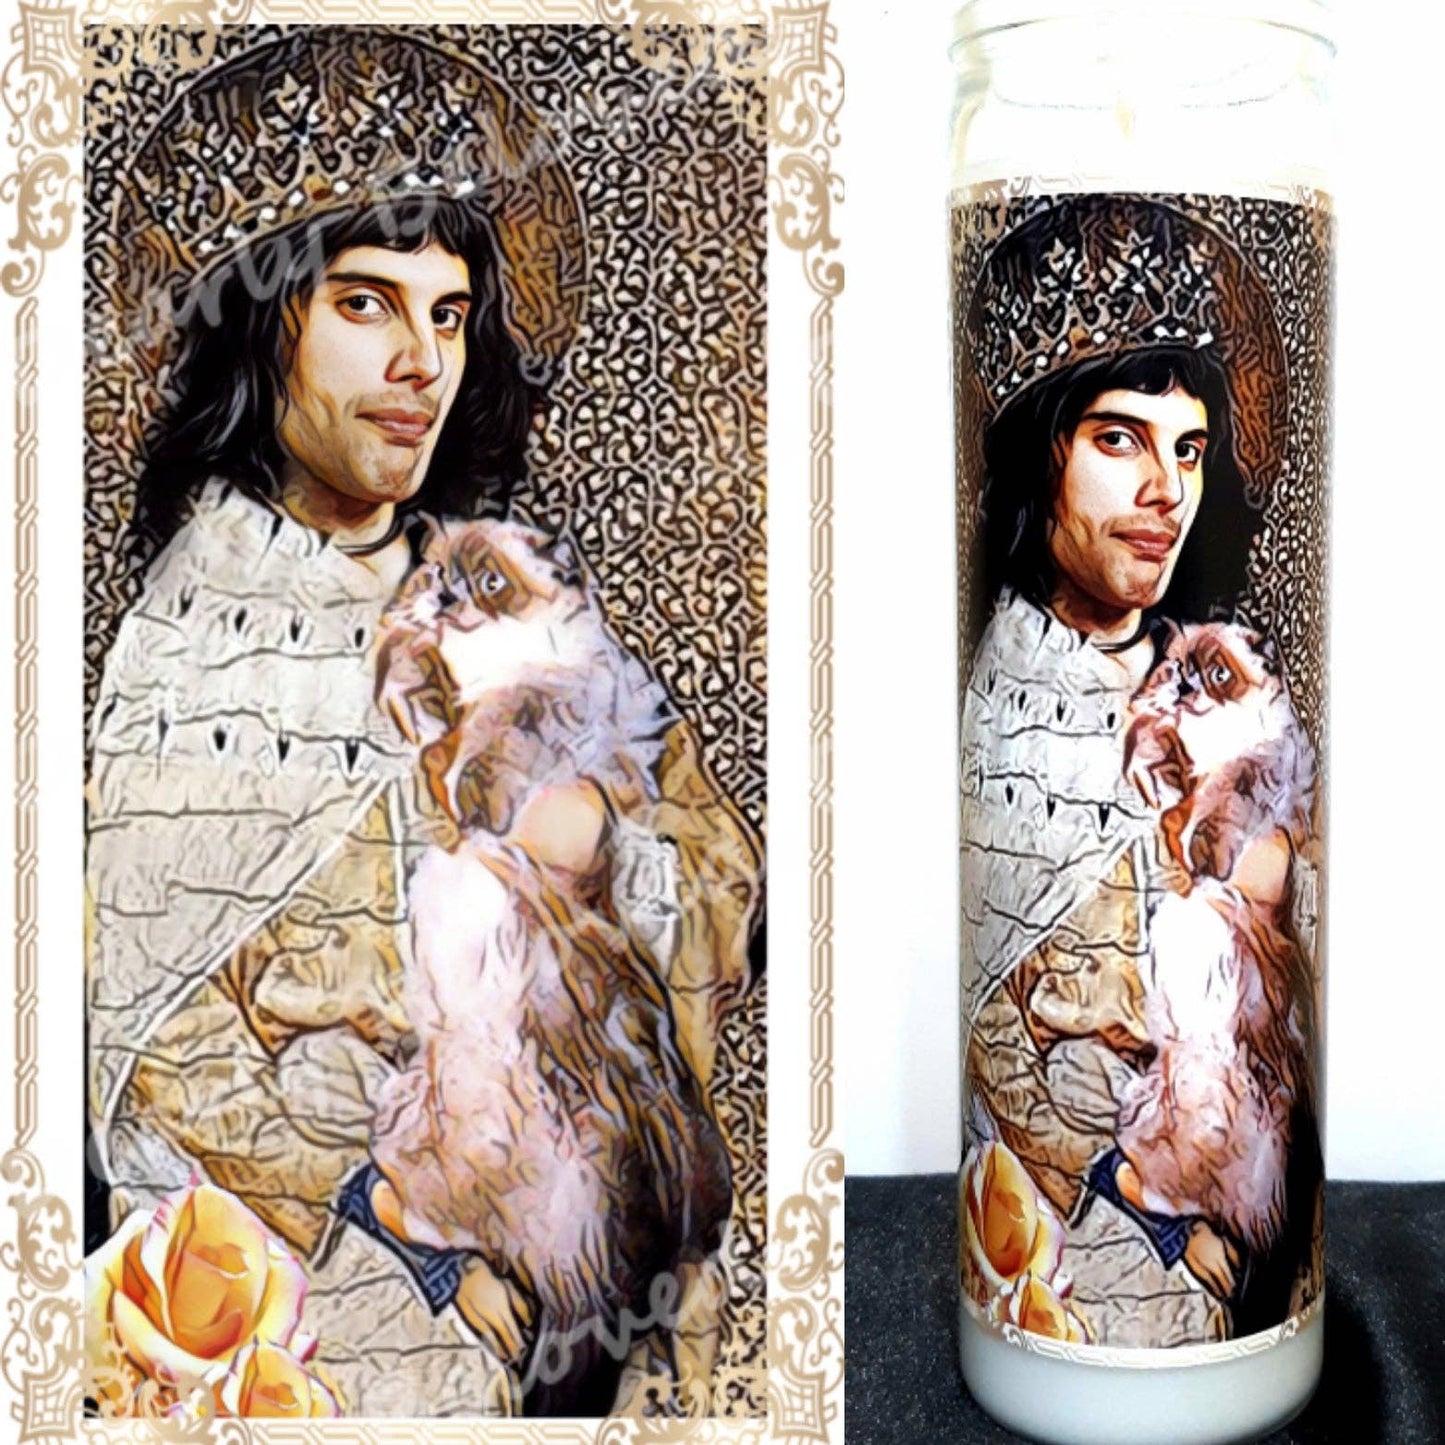 St Freddie Mercury - 7-Day glass Jar Prayer Candle. Somebody